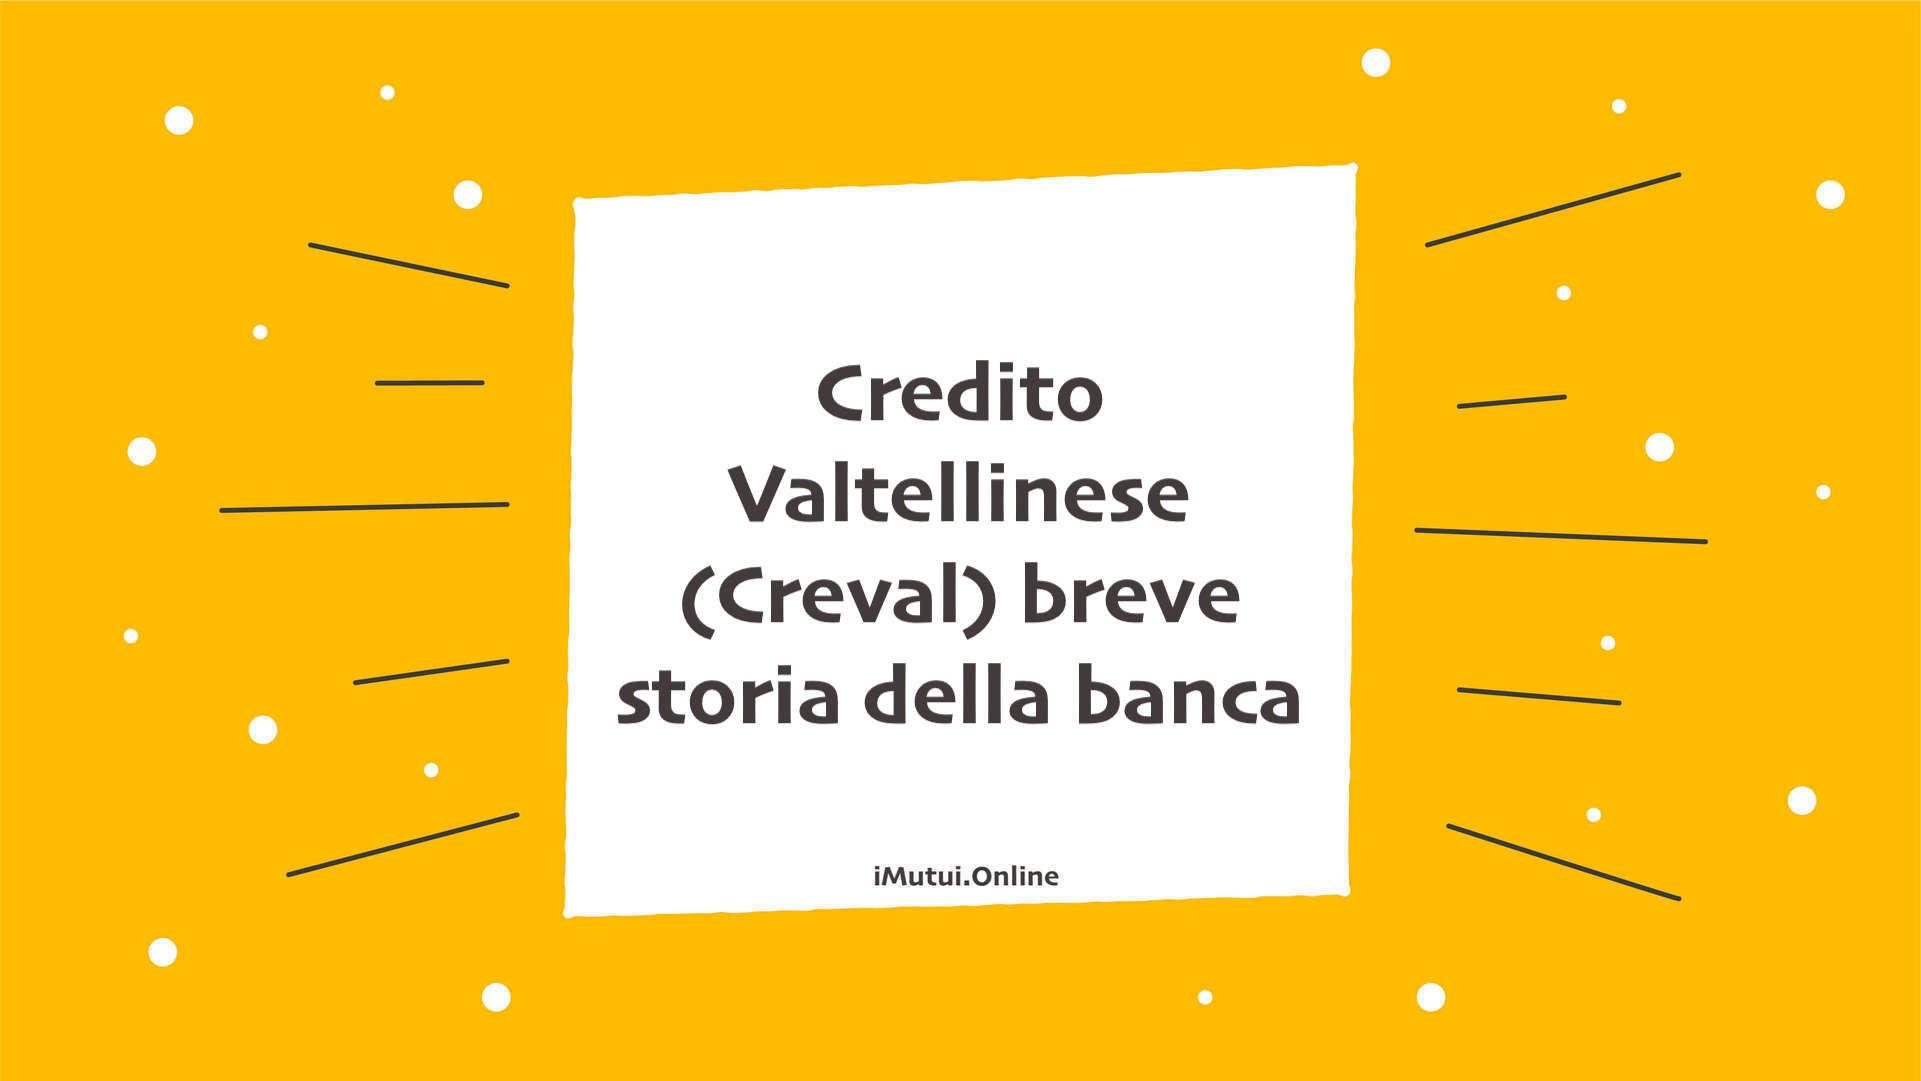 Credito Valtellinese (Creval) breve storia